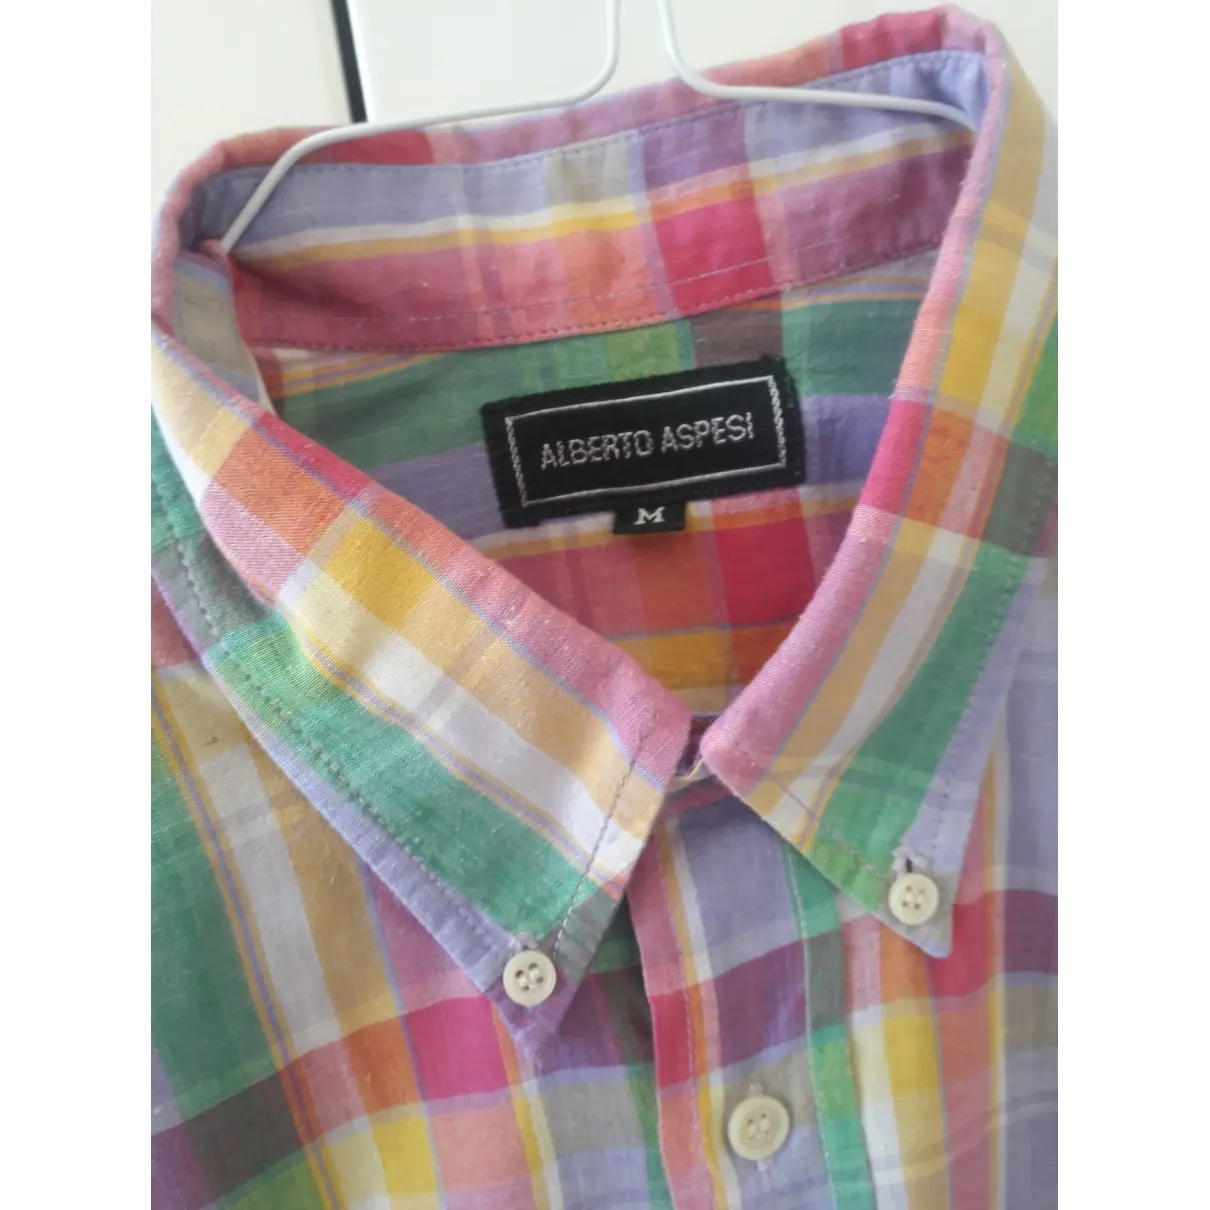 Aspesi Shirt for sale